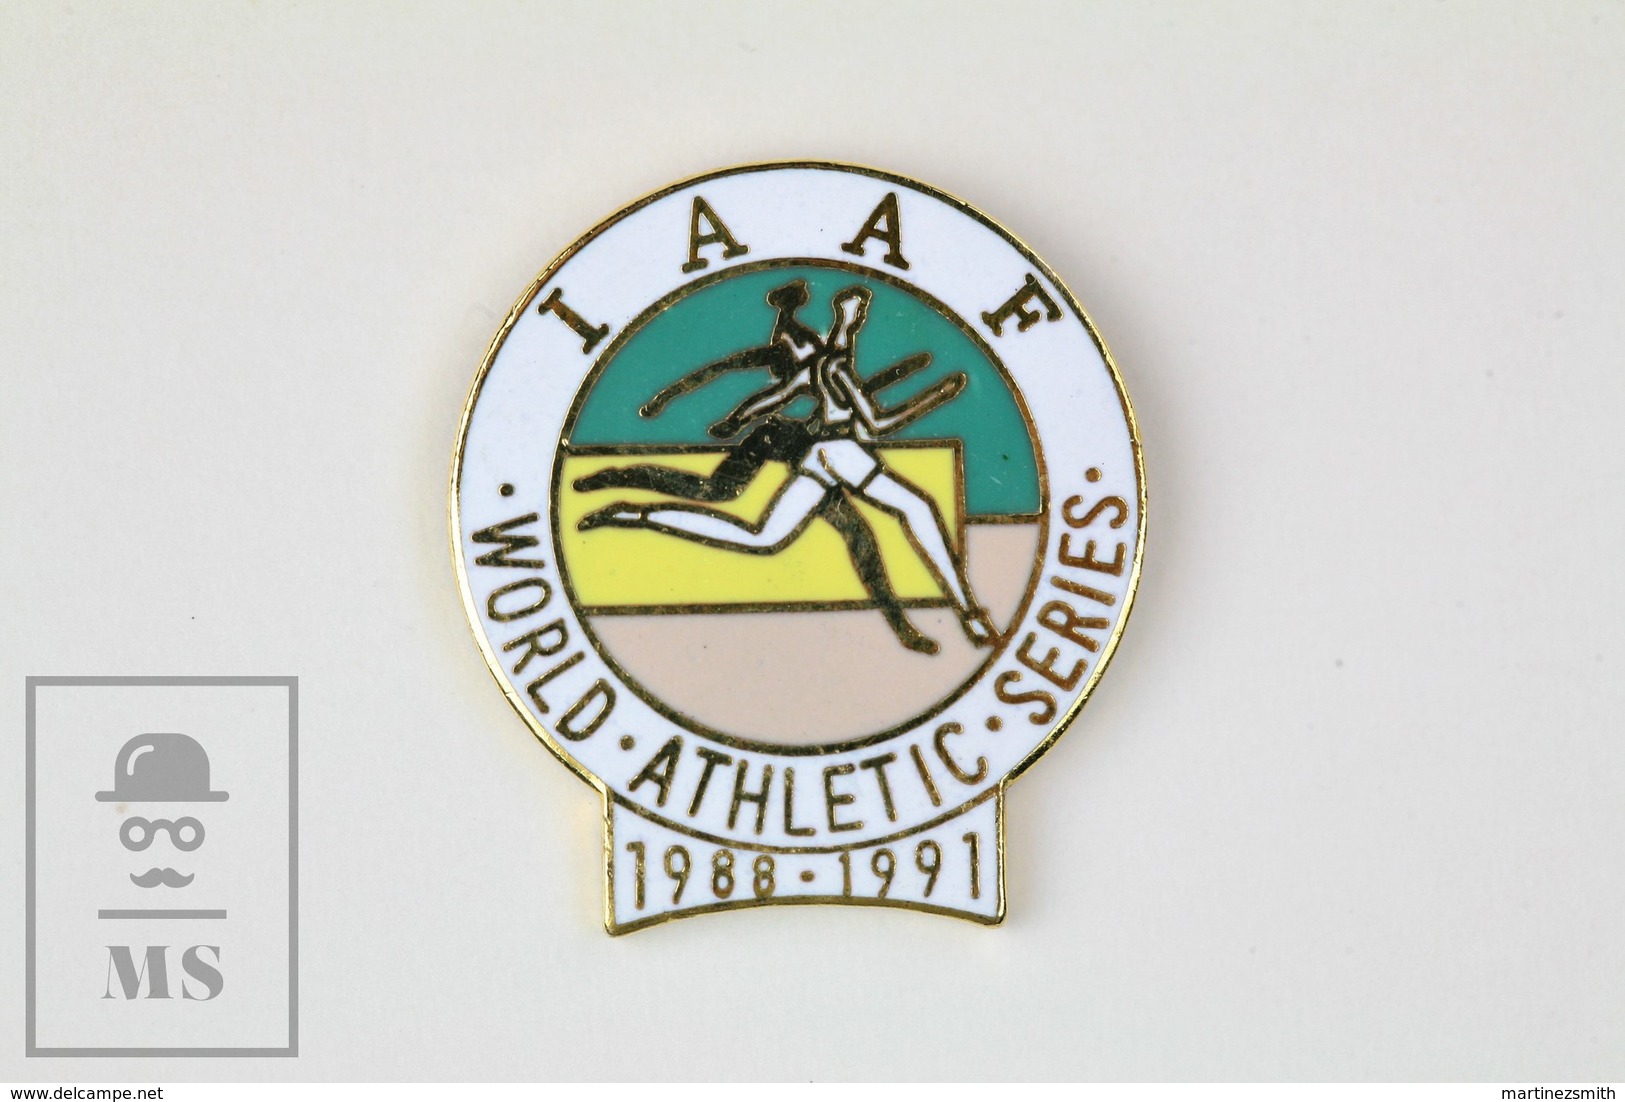 IAAF - World Athletic Series 1988 - 1991 - Pin Badge - Atletismo